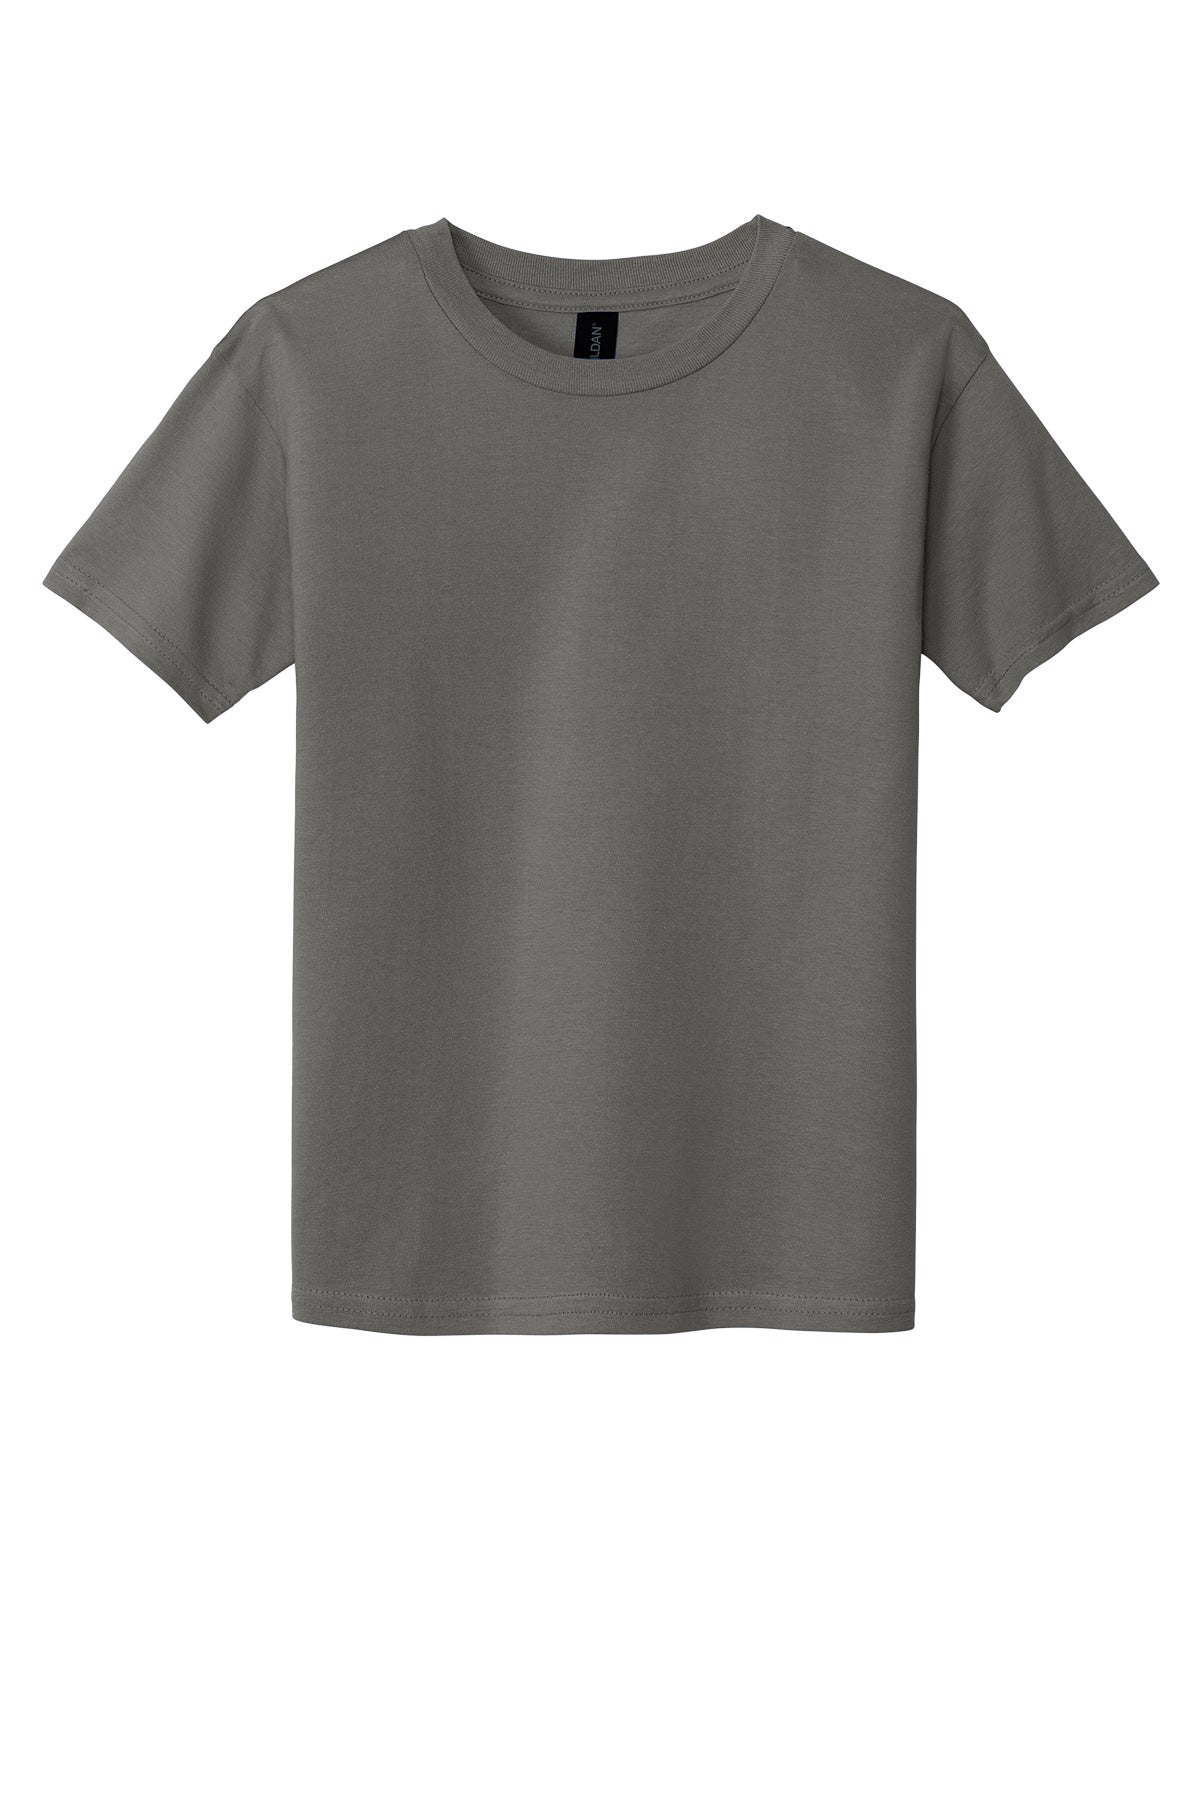 Gilden 64000B Youth T-Shirt Yth Small / Charcoal